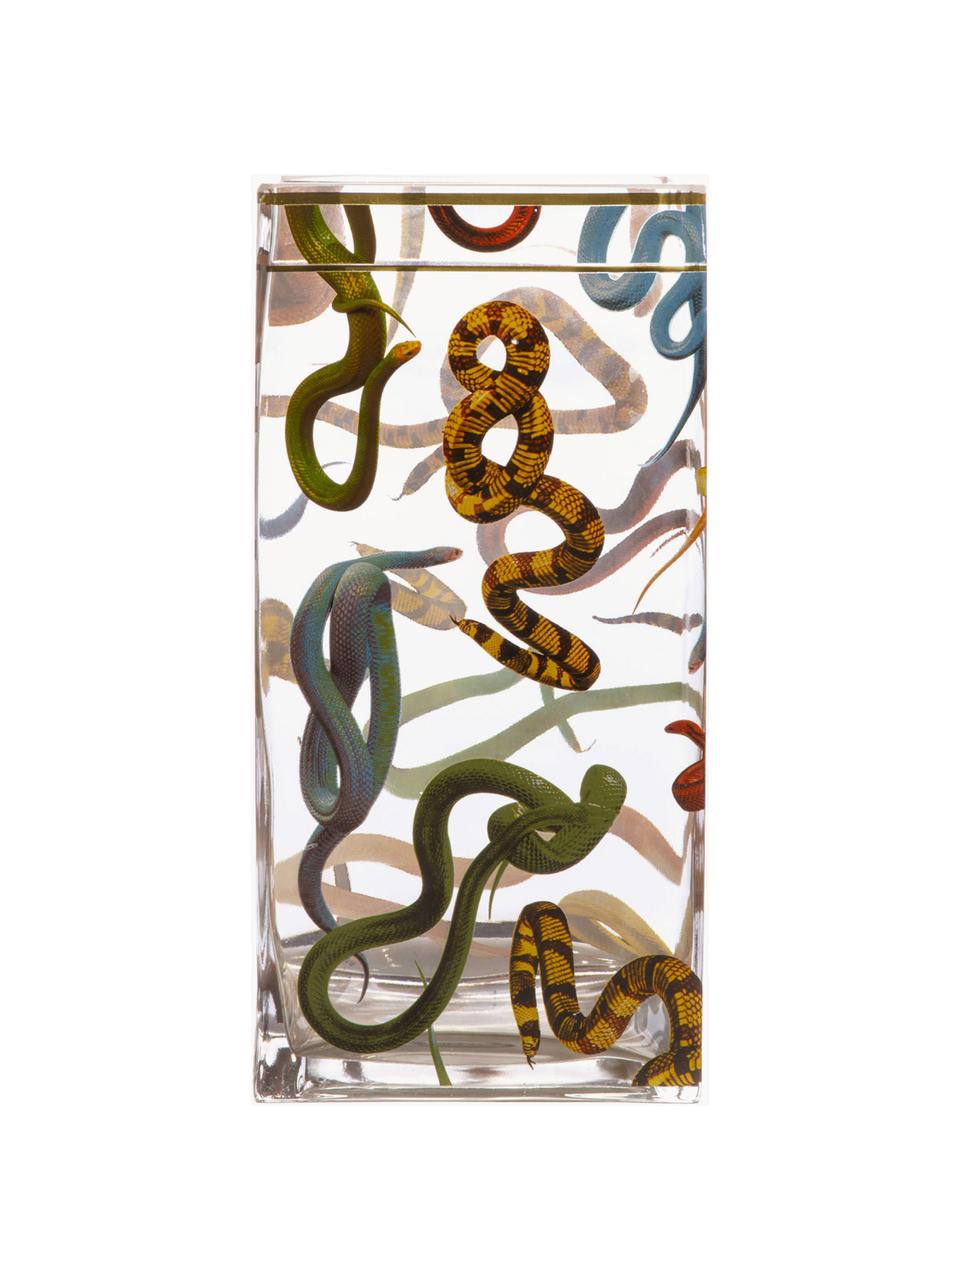 Glazen vaas Snakes, H 30 cm, Vaas: glas, Rand: goudkleurig, Slangen, B 15 x H 30 cm